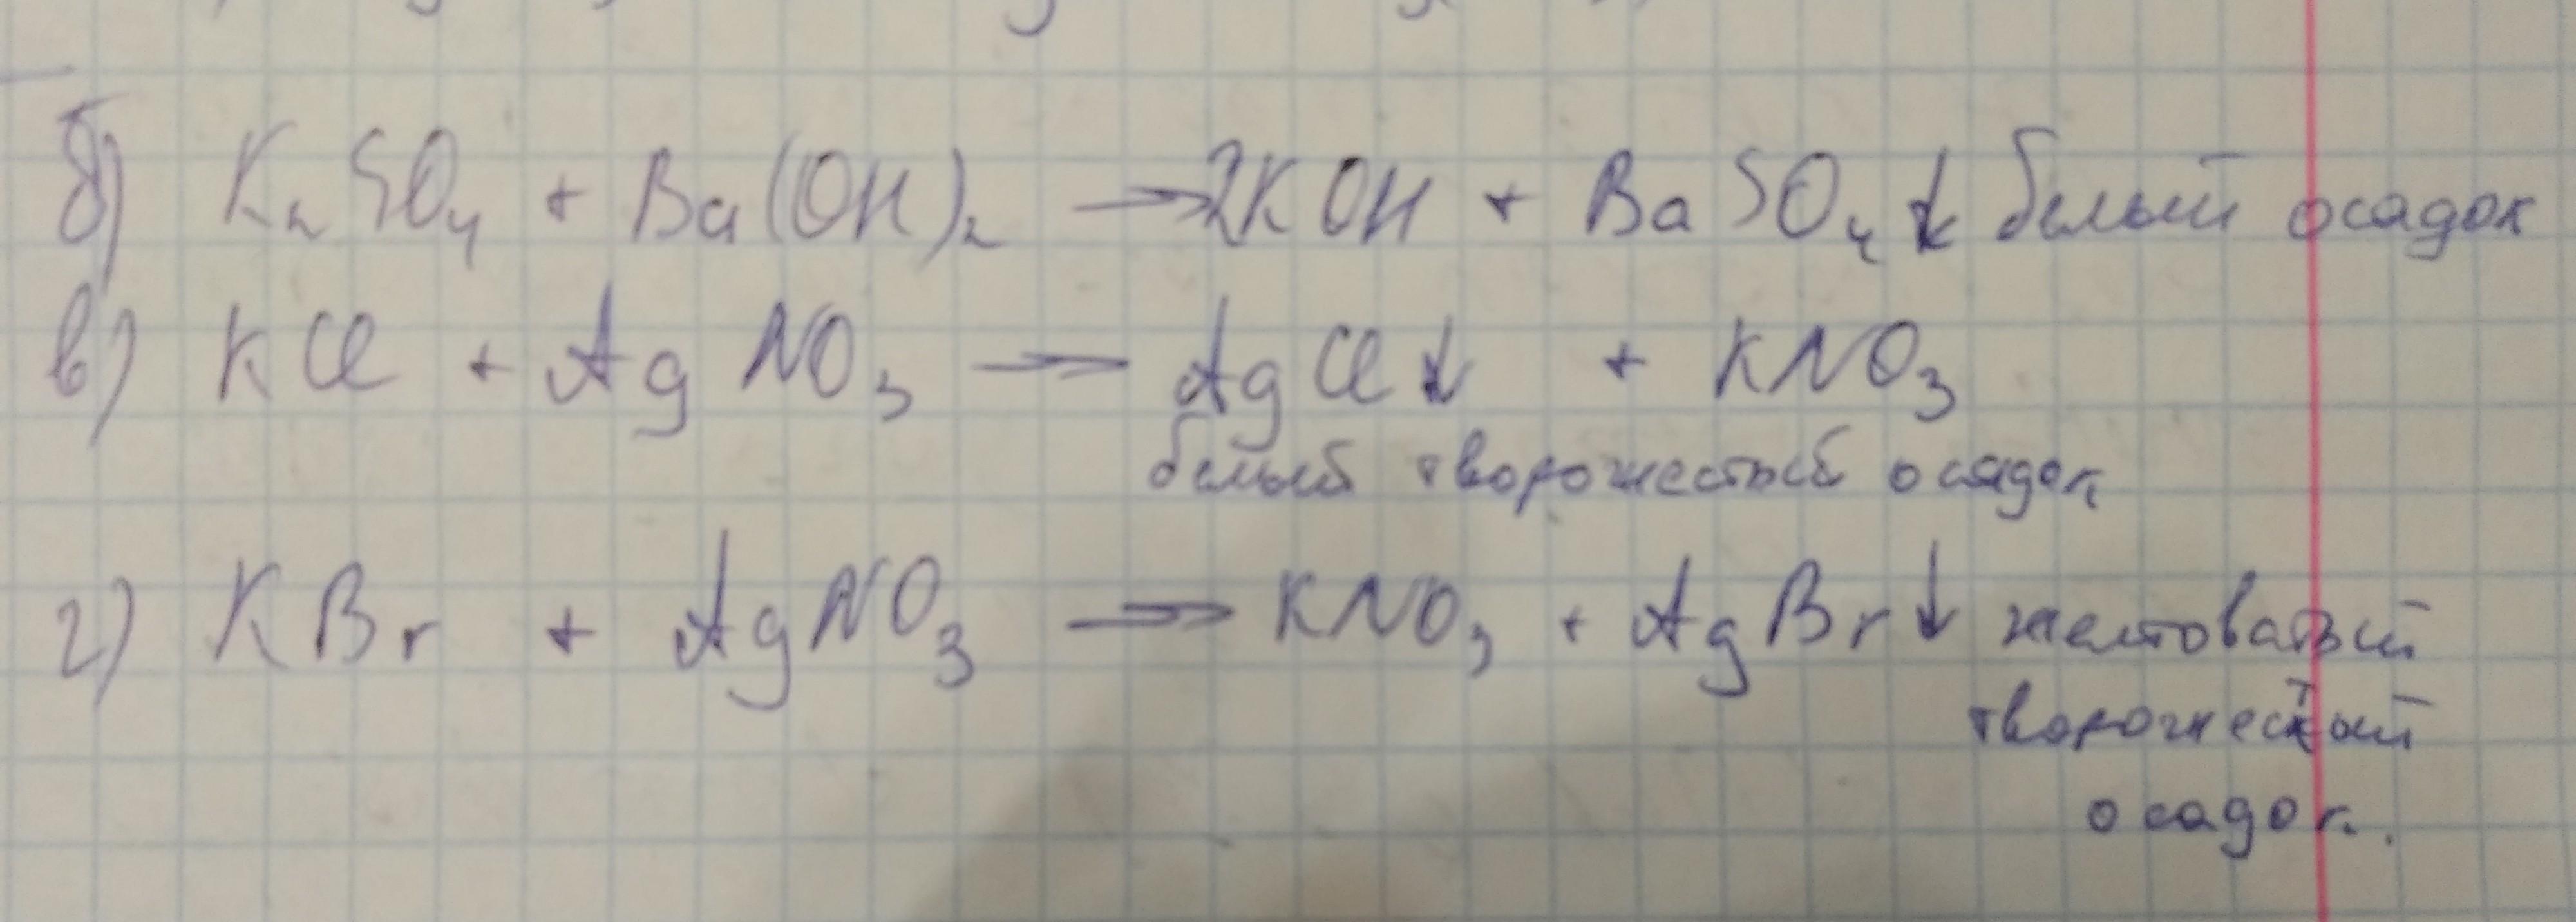 Kcl реагент. K2so4 KCL. KBR раствор. So2 в пробирке. Ki h2so4 HFP,FD gthvfyrfyfnrfkbz.